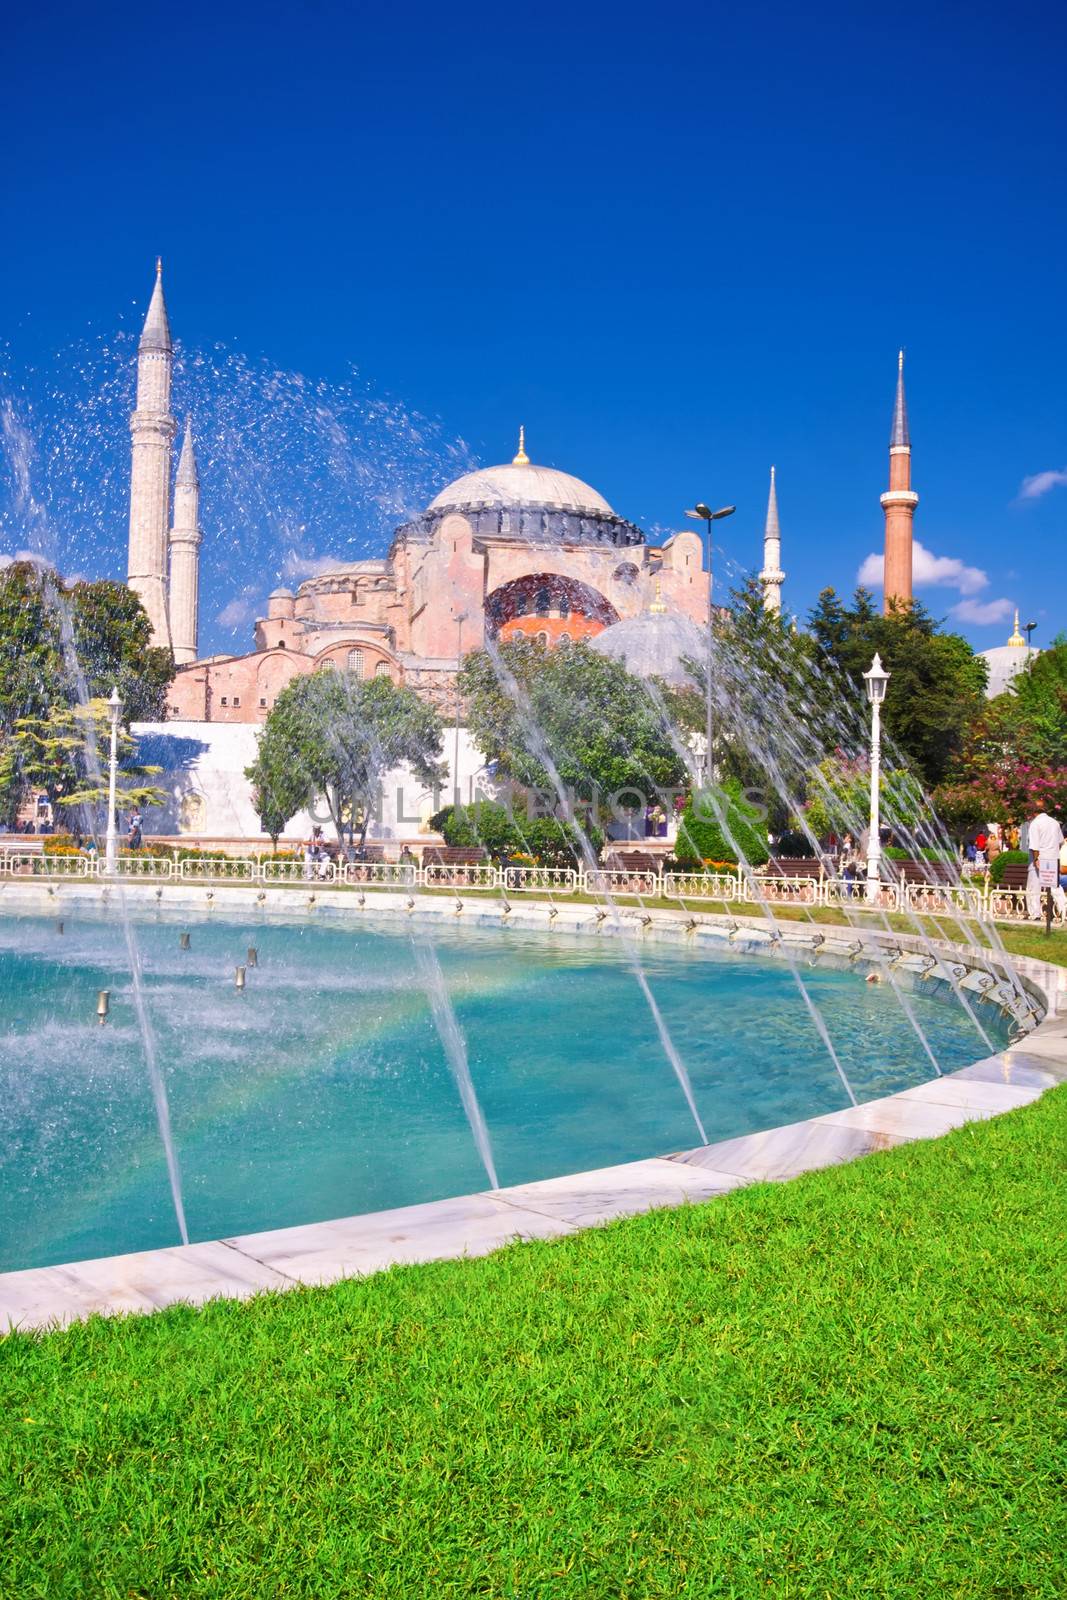 Hagia Sophia by sailorr